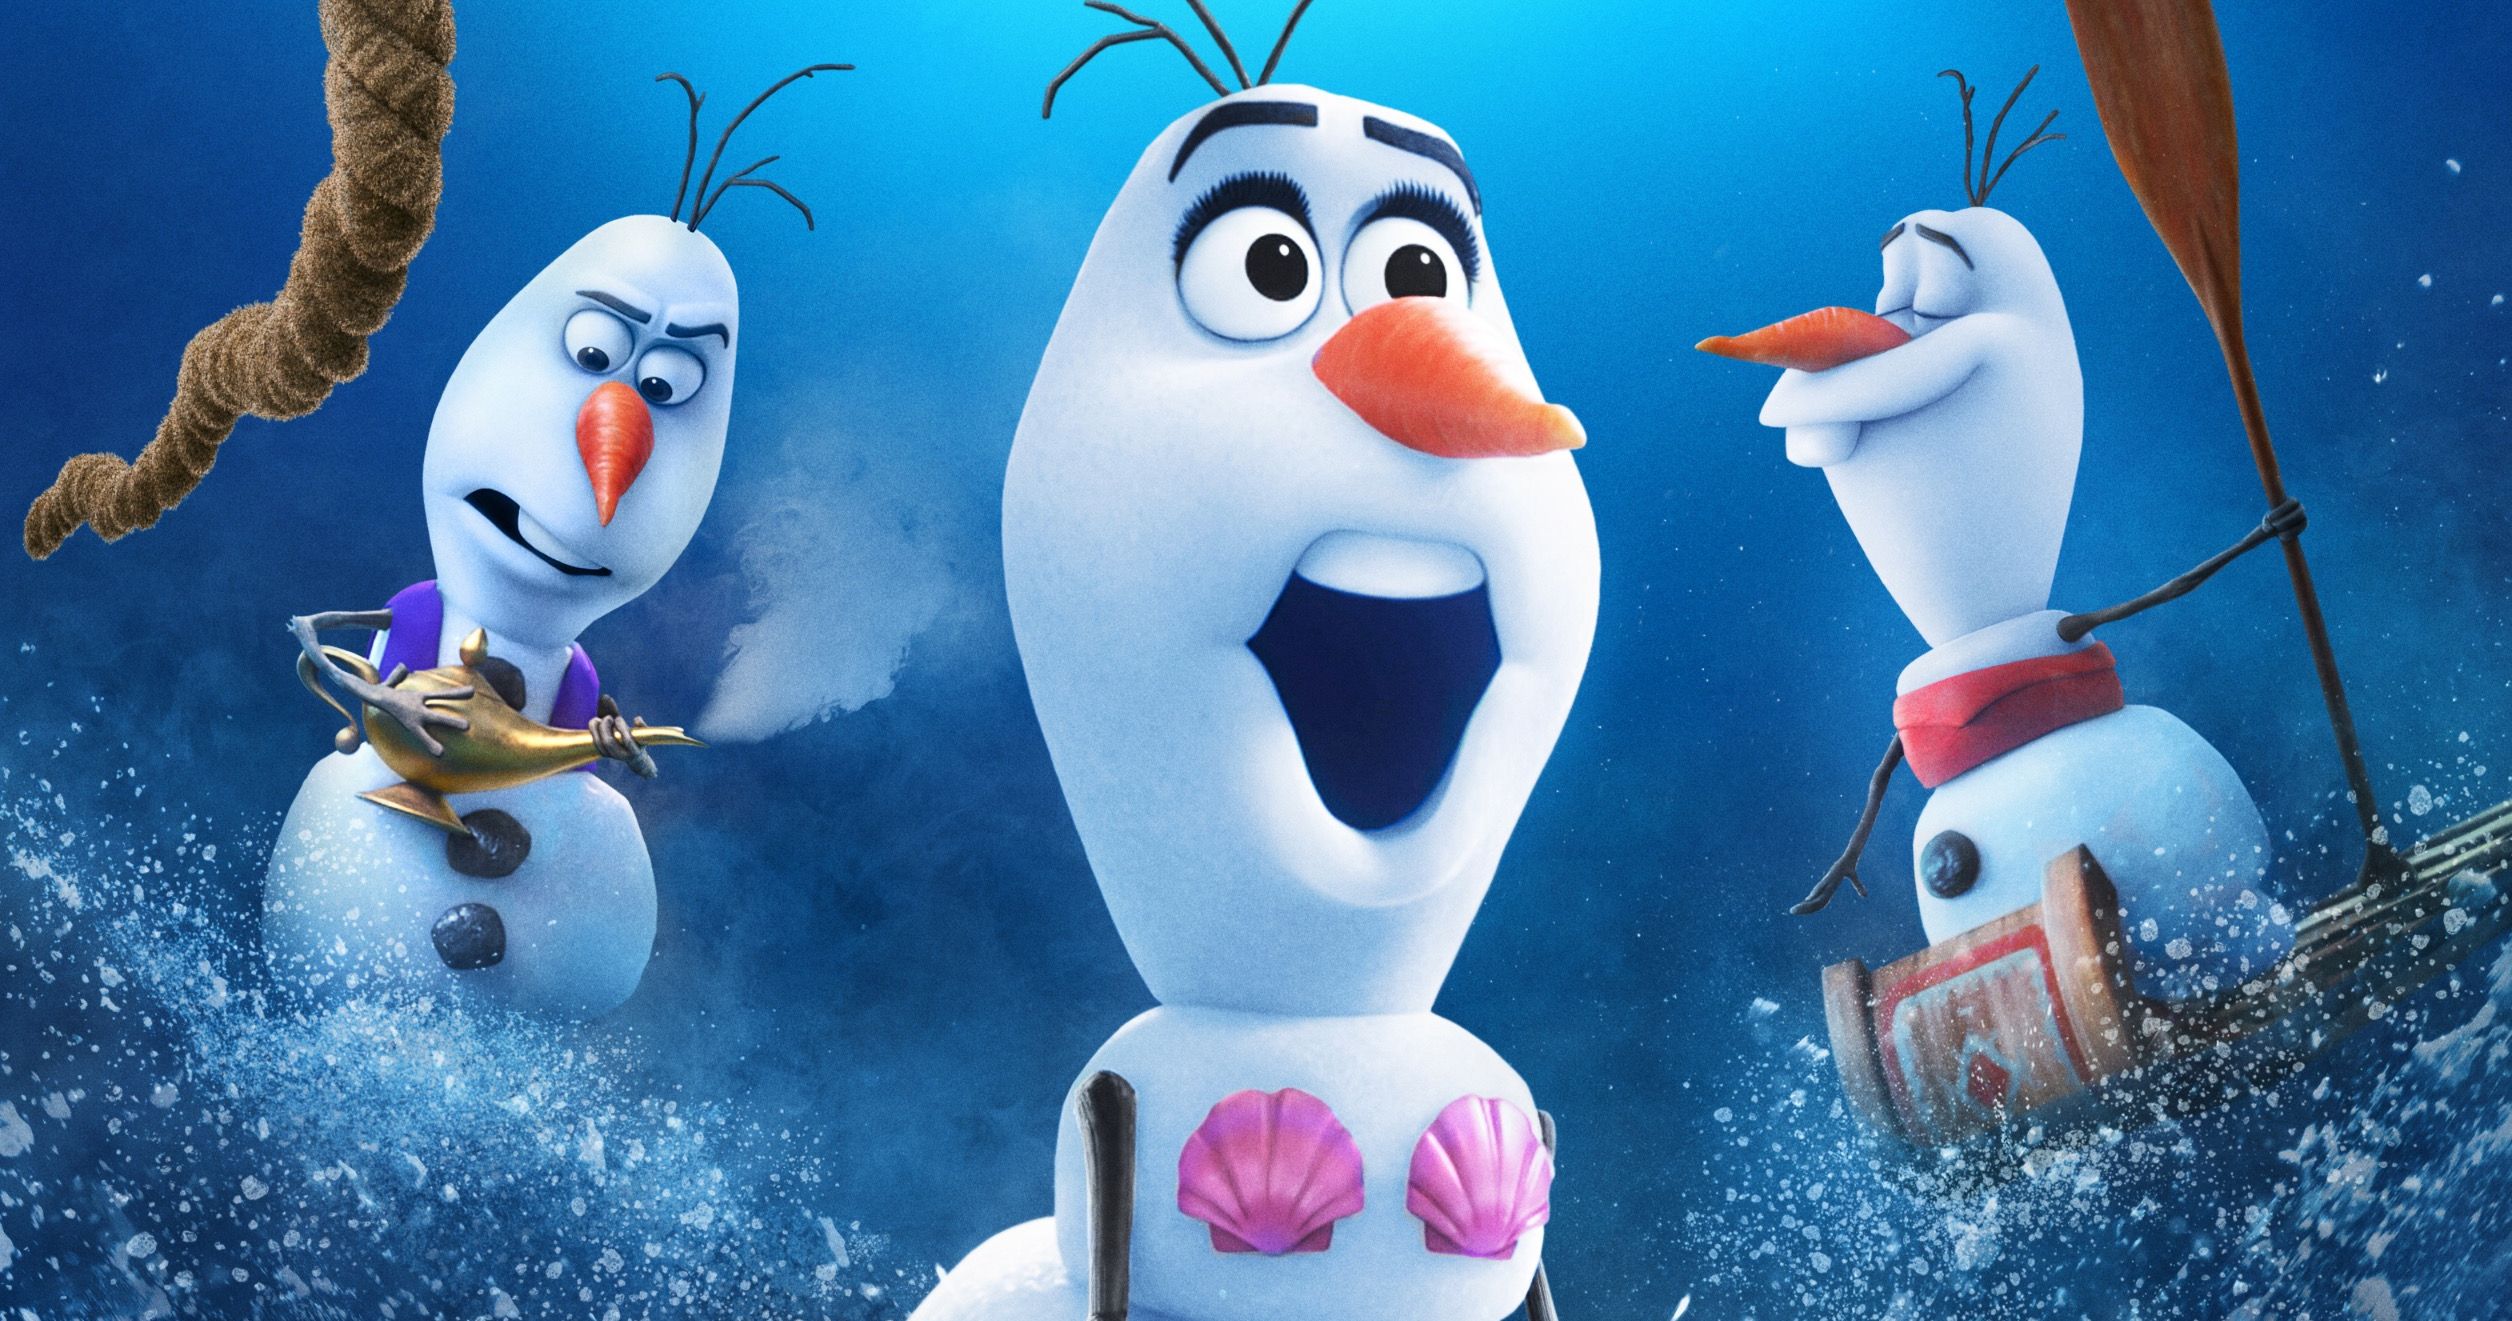 Olaf Presents Poster Has the Frozen Snowman Recreating Disney Classics